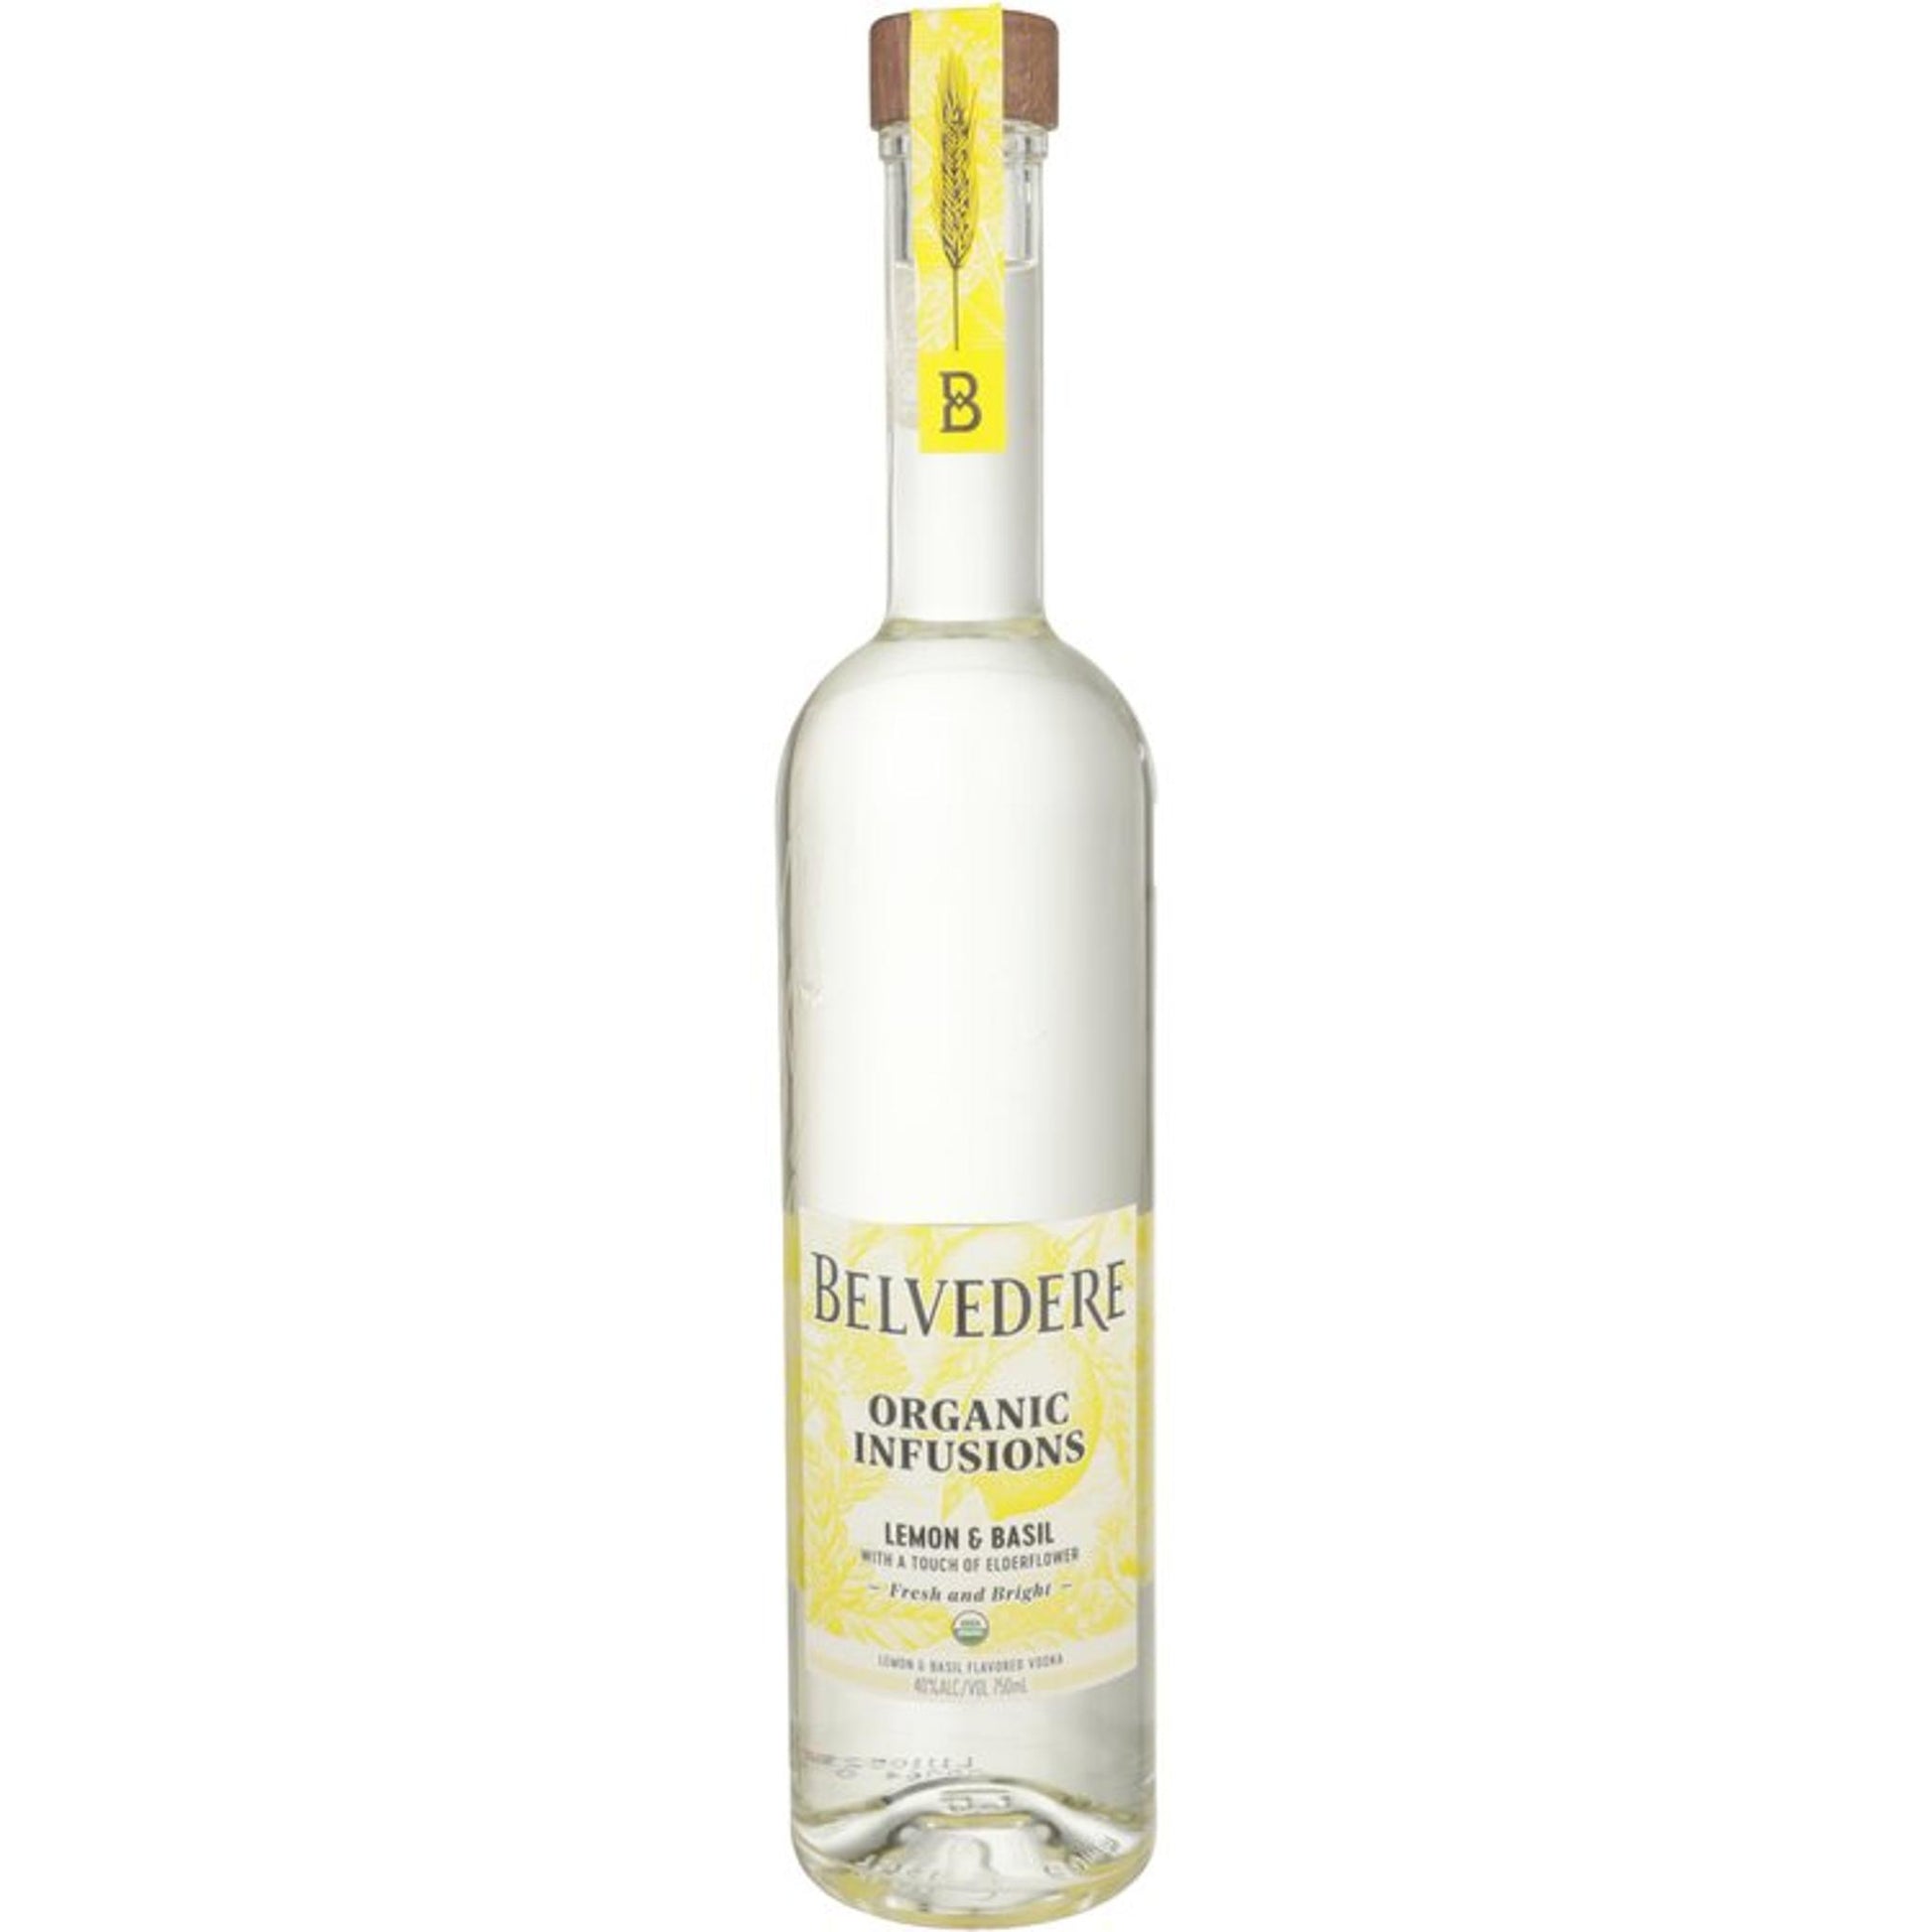 Belvedere Organic Infusions Lemon & Basil Flavored Vodka – Liquor Geeks